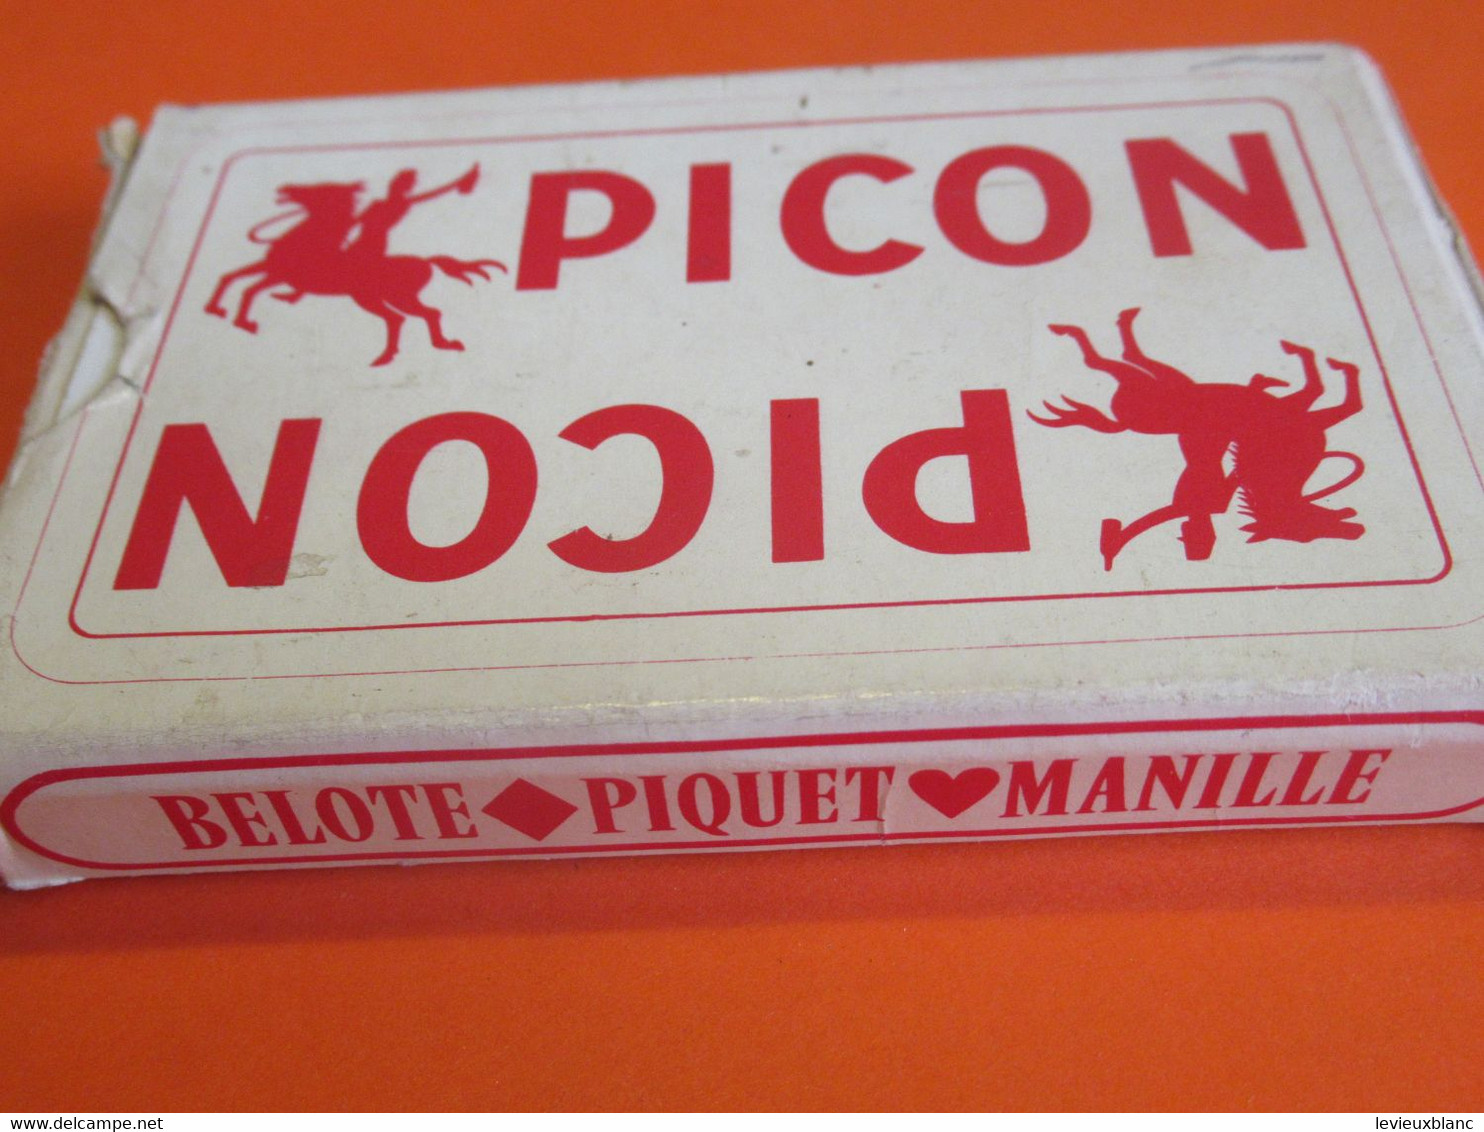 Jeu de 32 cartes - Belote , Piquet , Manille